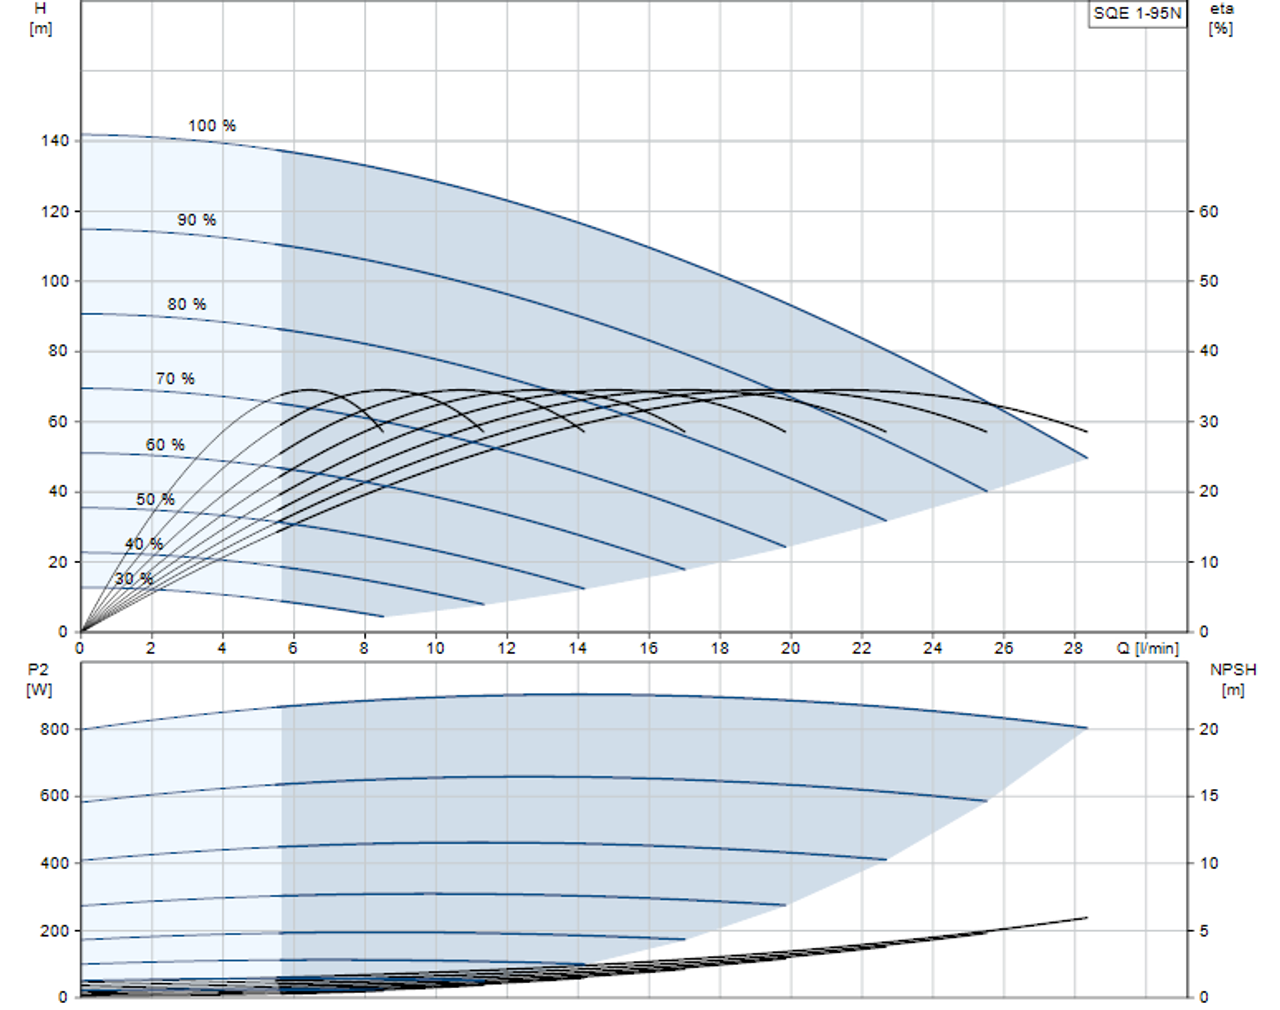 SQE 1-95 N Performance Curve